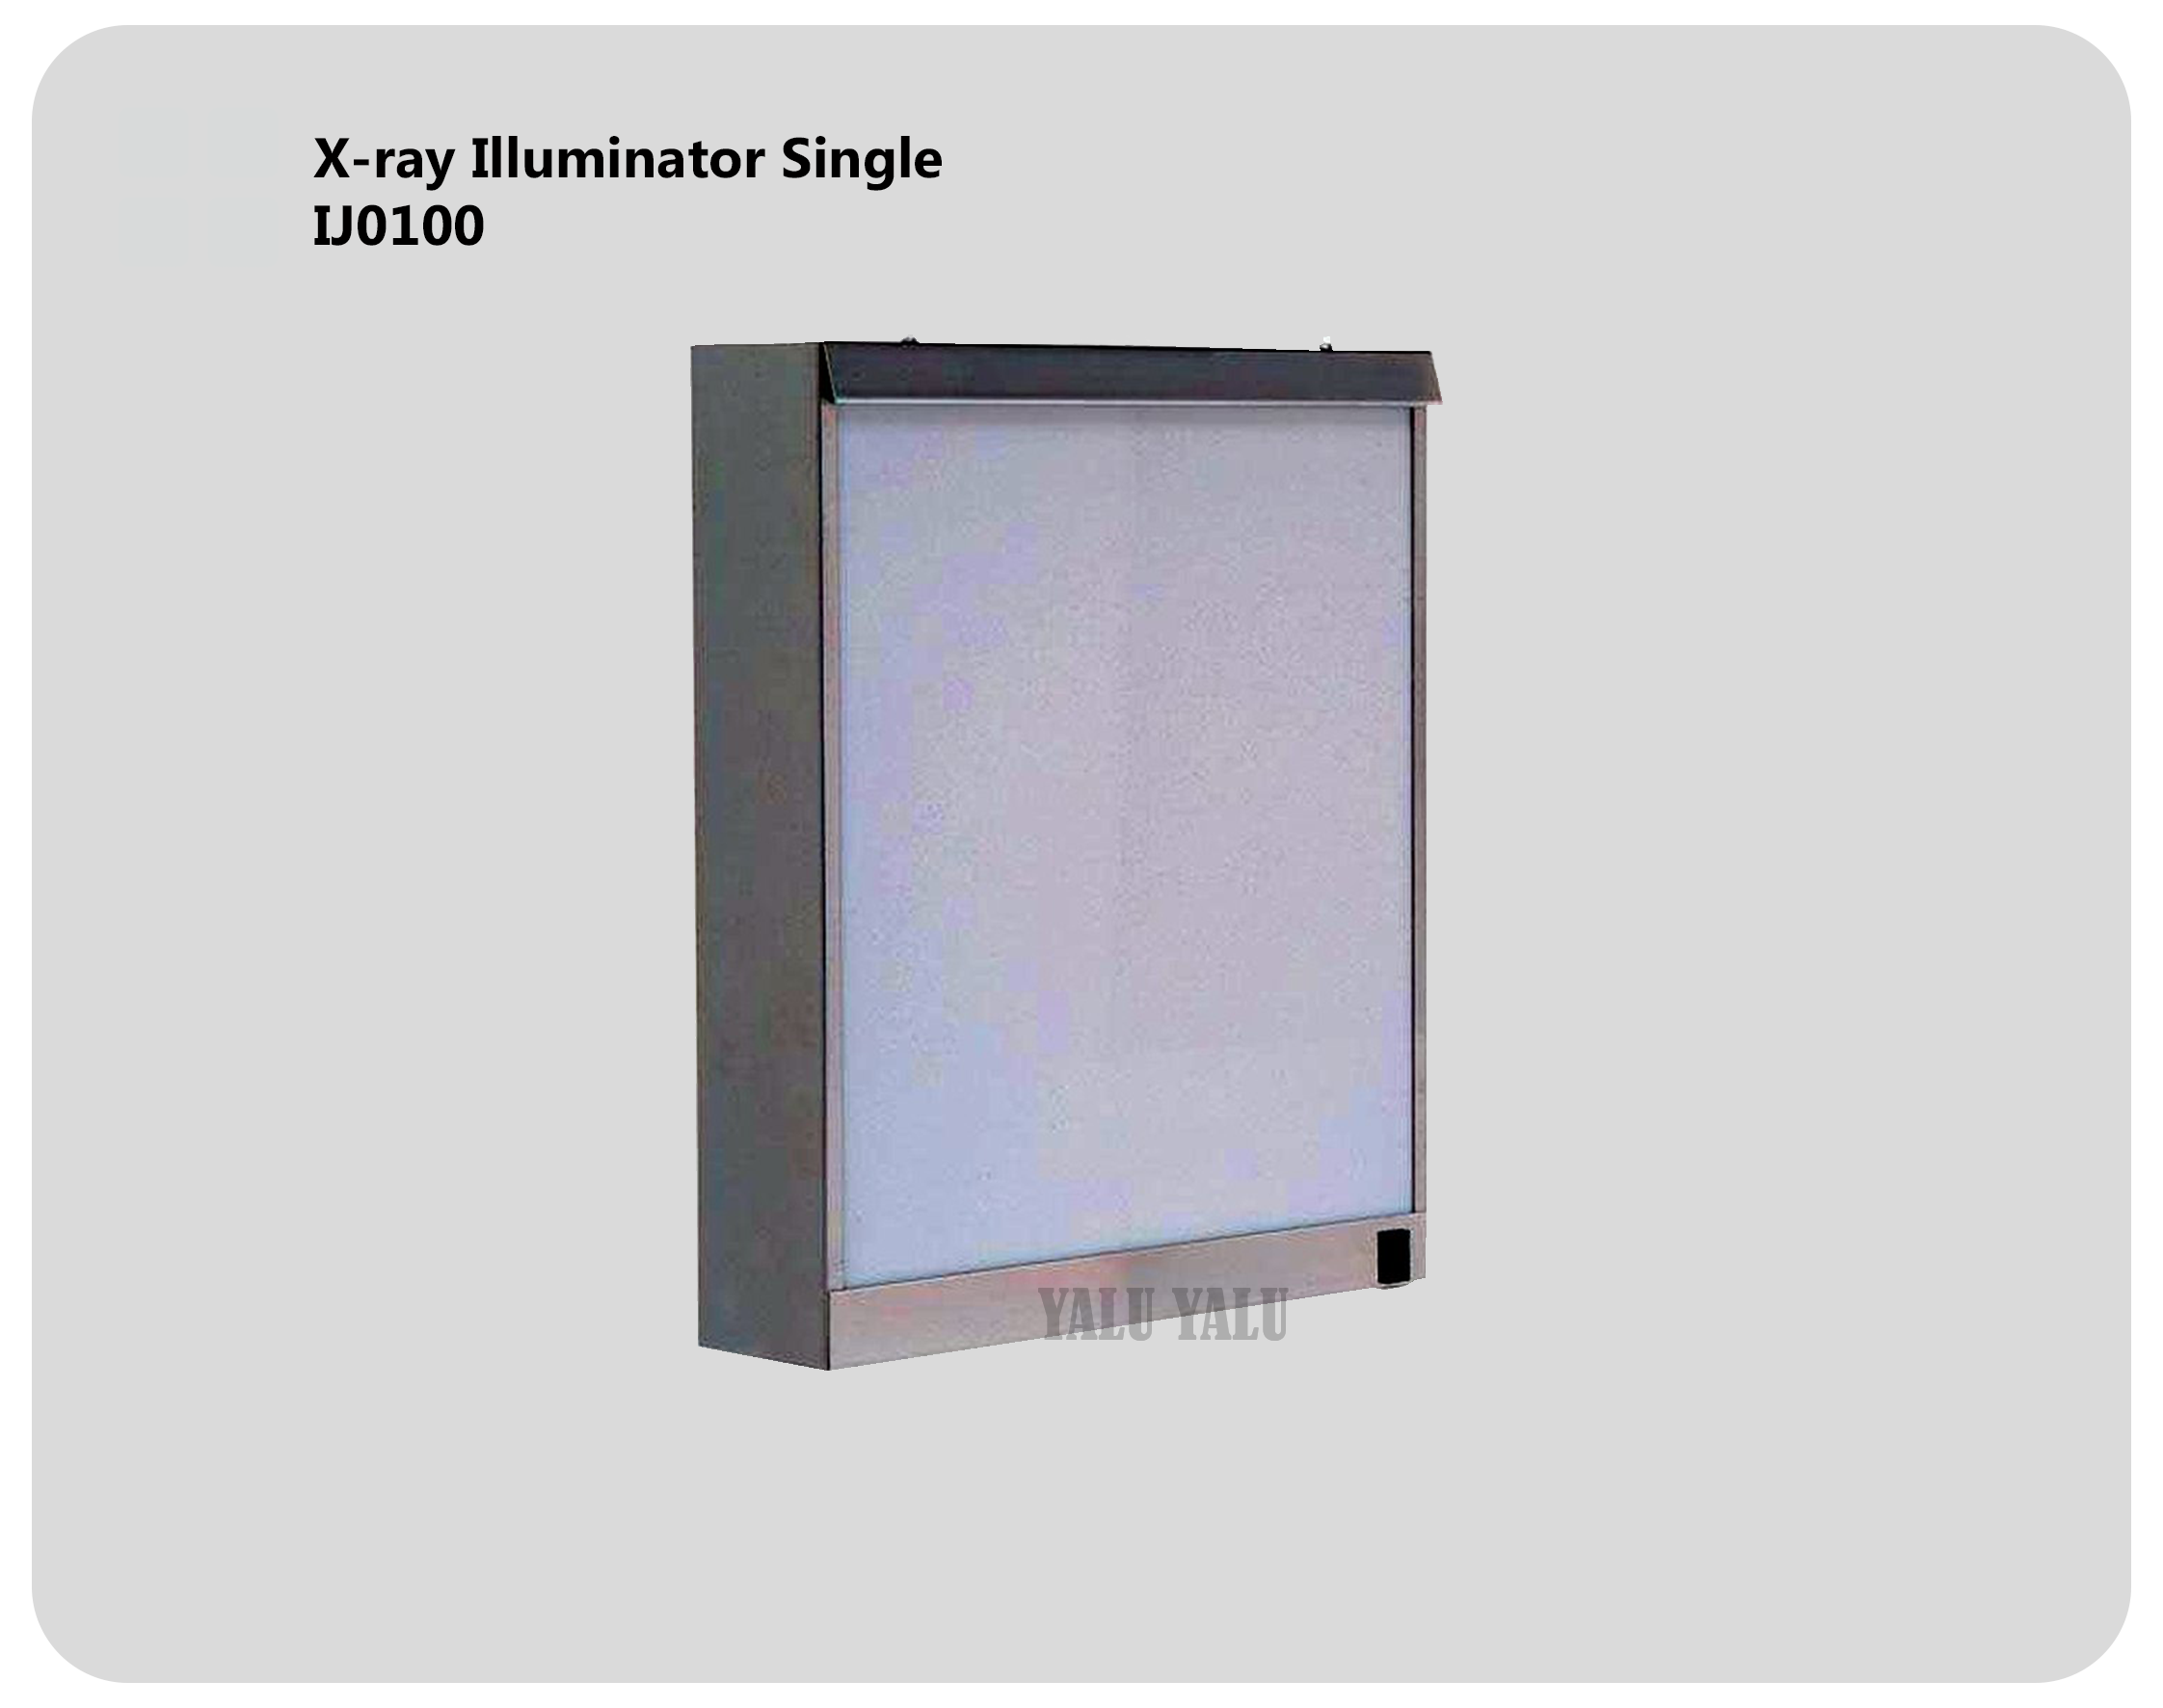 X-Ray Illuminator yaluyalu